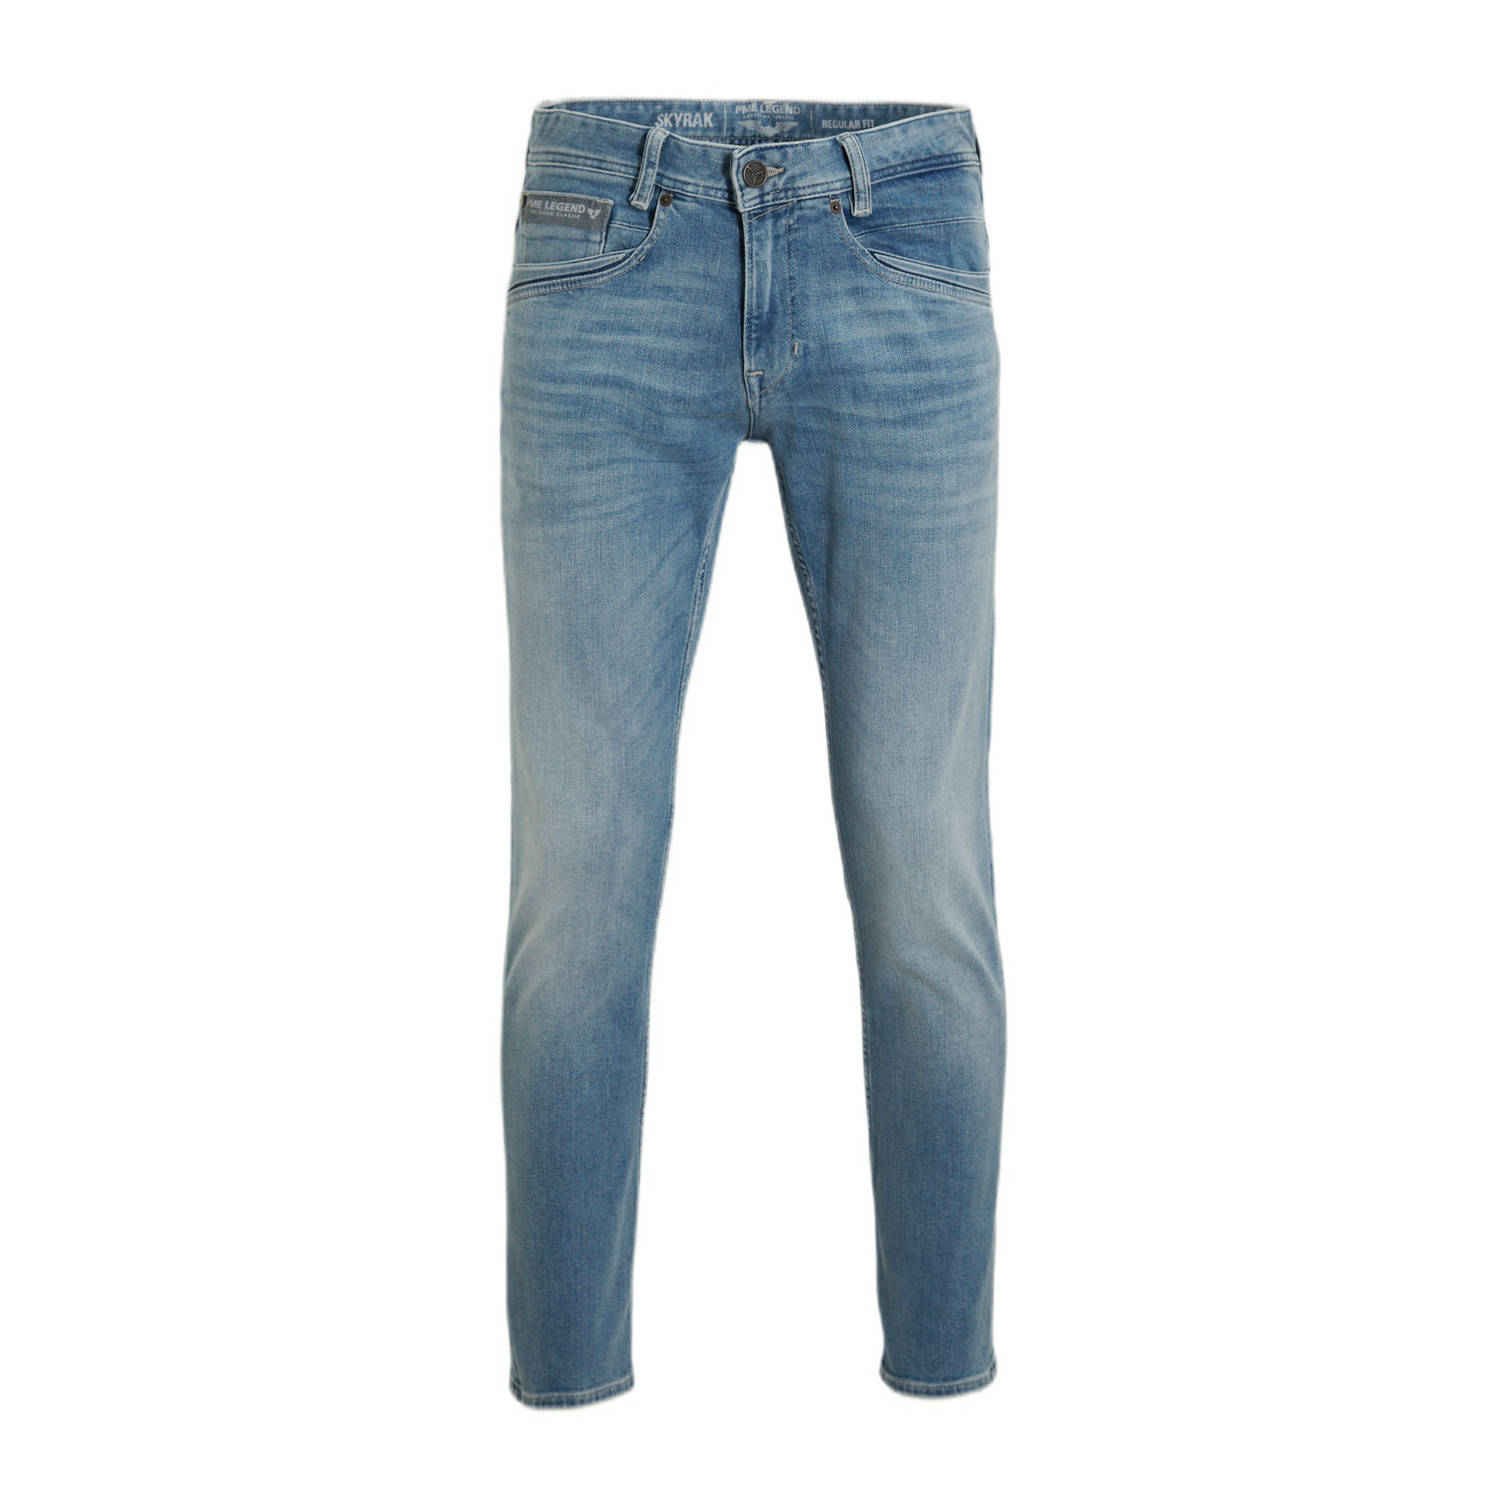 PME Legend regular fit jeans SKYRAK light blue denim